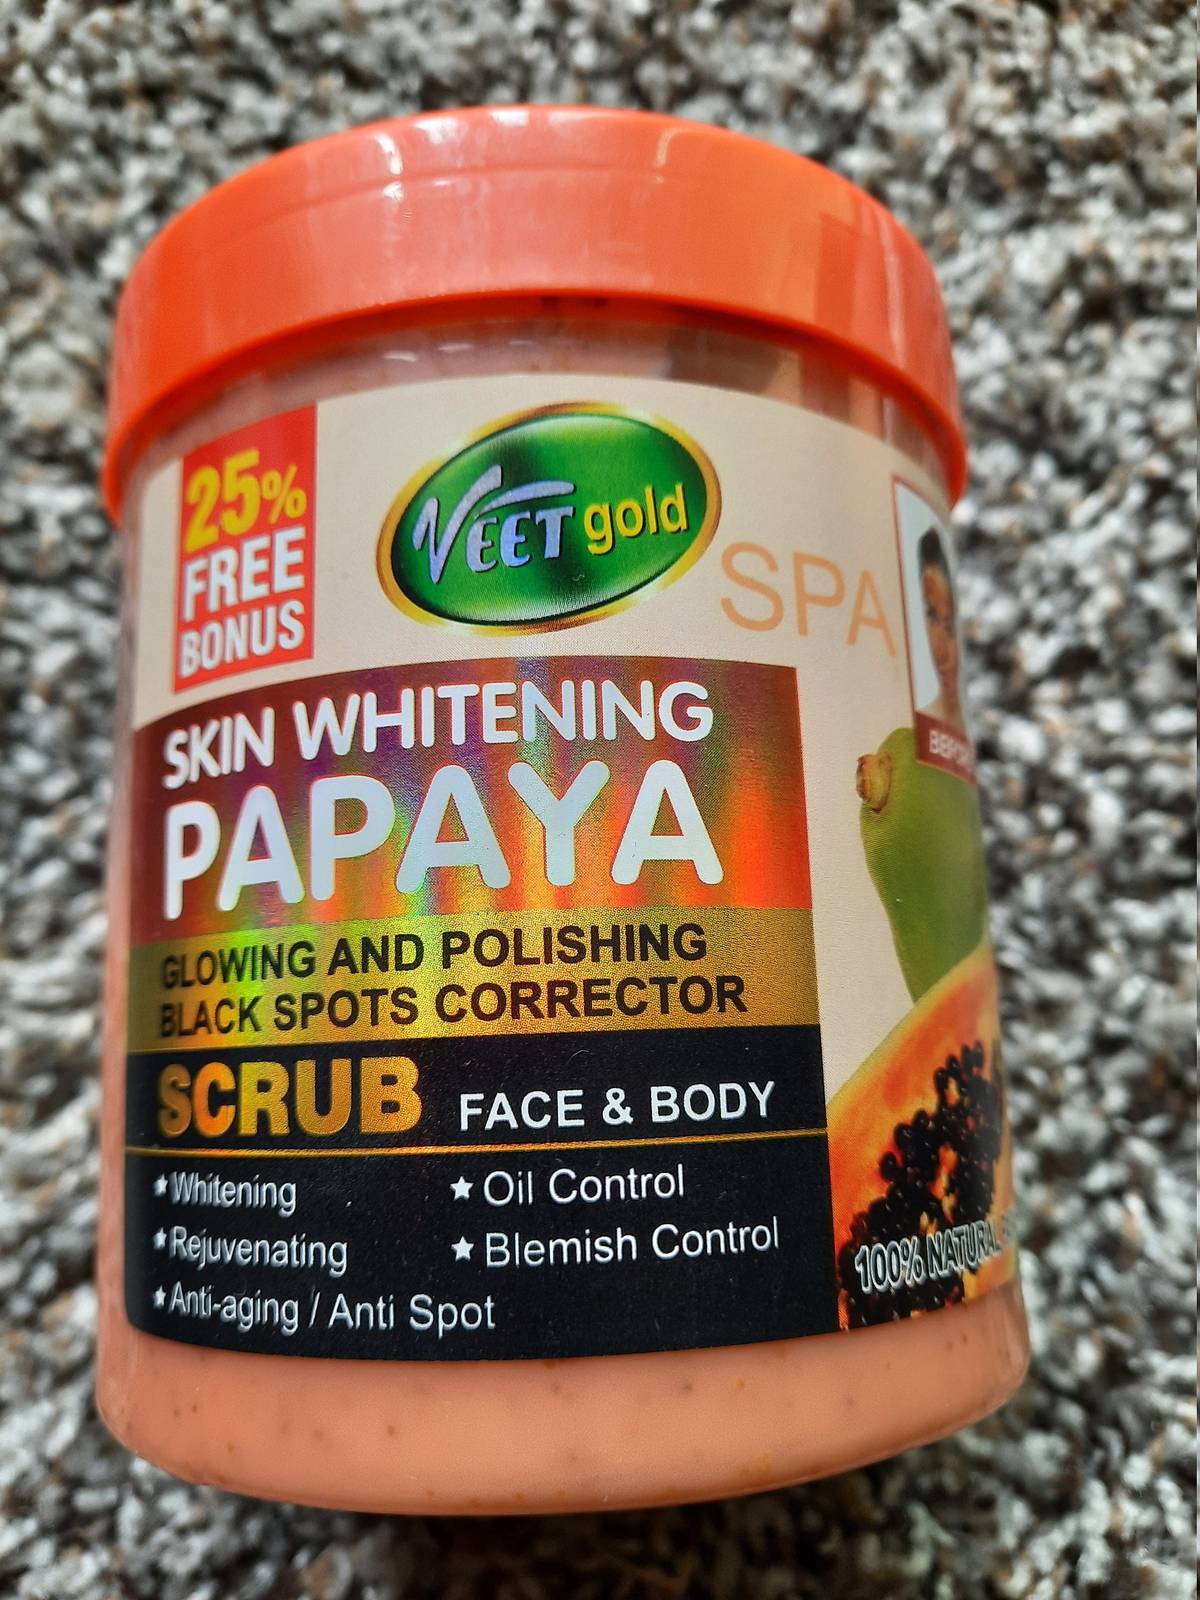 Veet gold skin whitening papaya glowing and polishing dark spots corrector scrub